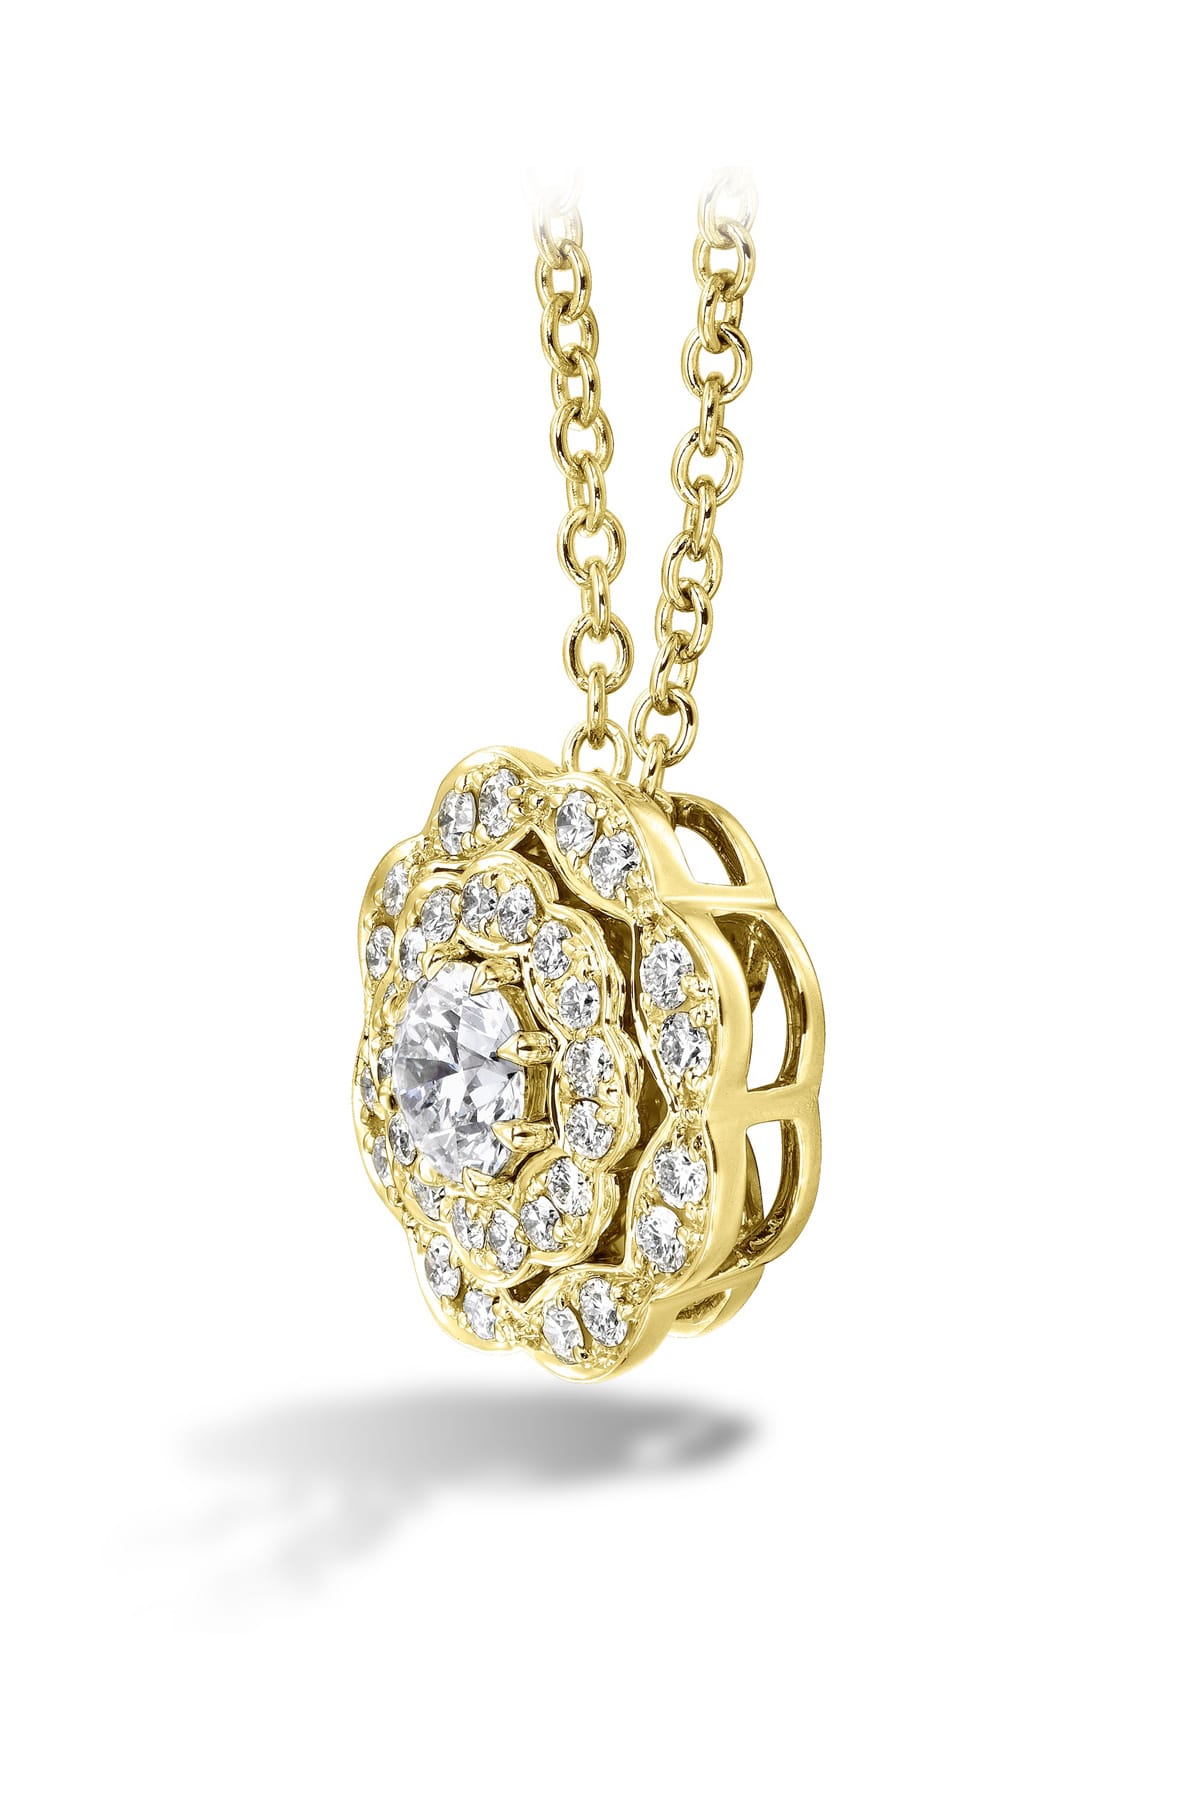 Lorelei Double Halo Diamond Pendant From Hearts On Fire available at LeGassick Diamonds and Jewellery Gold Coast, Australia.